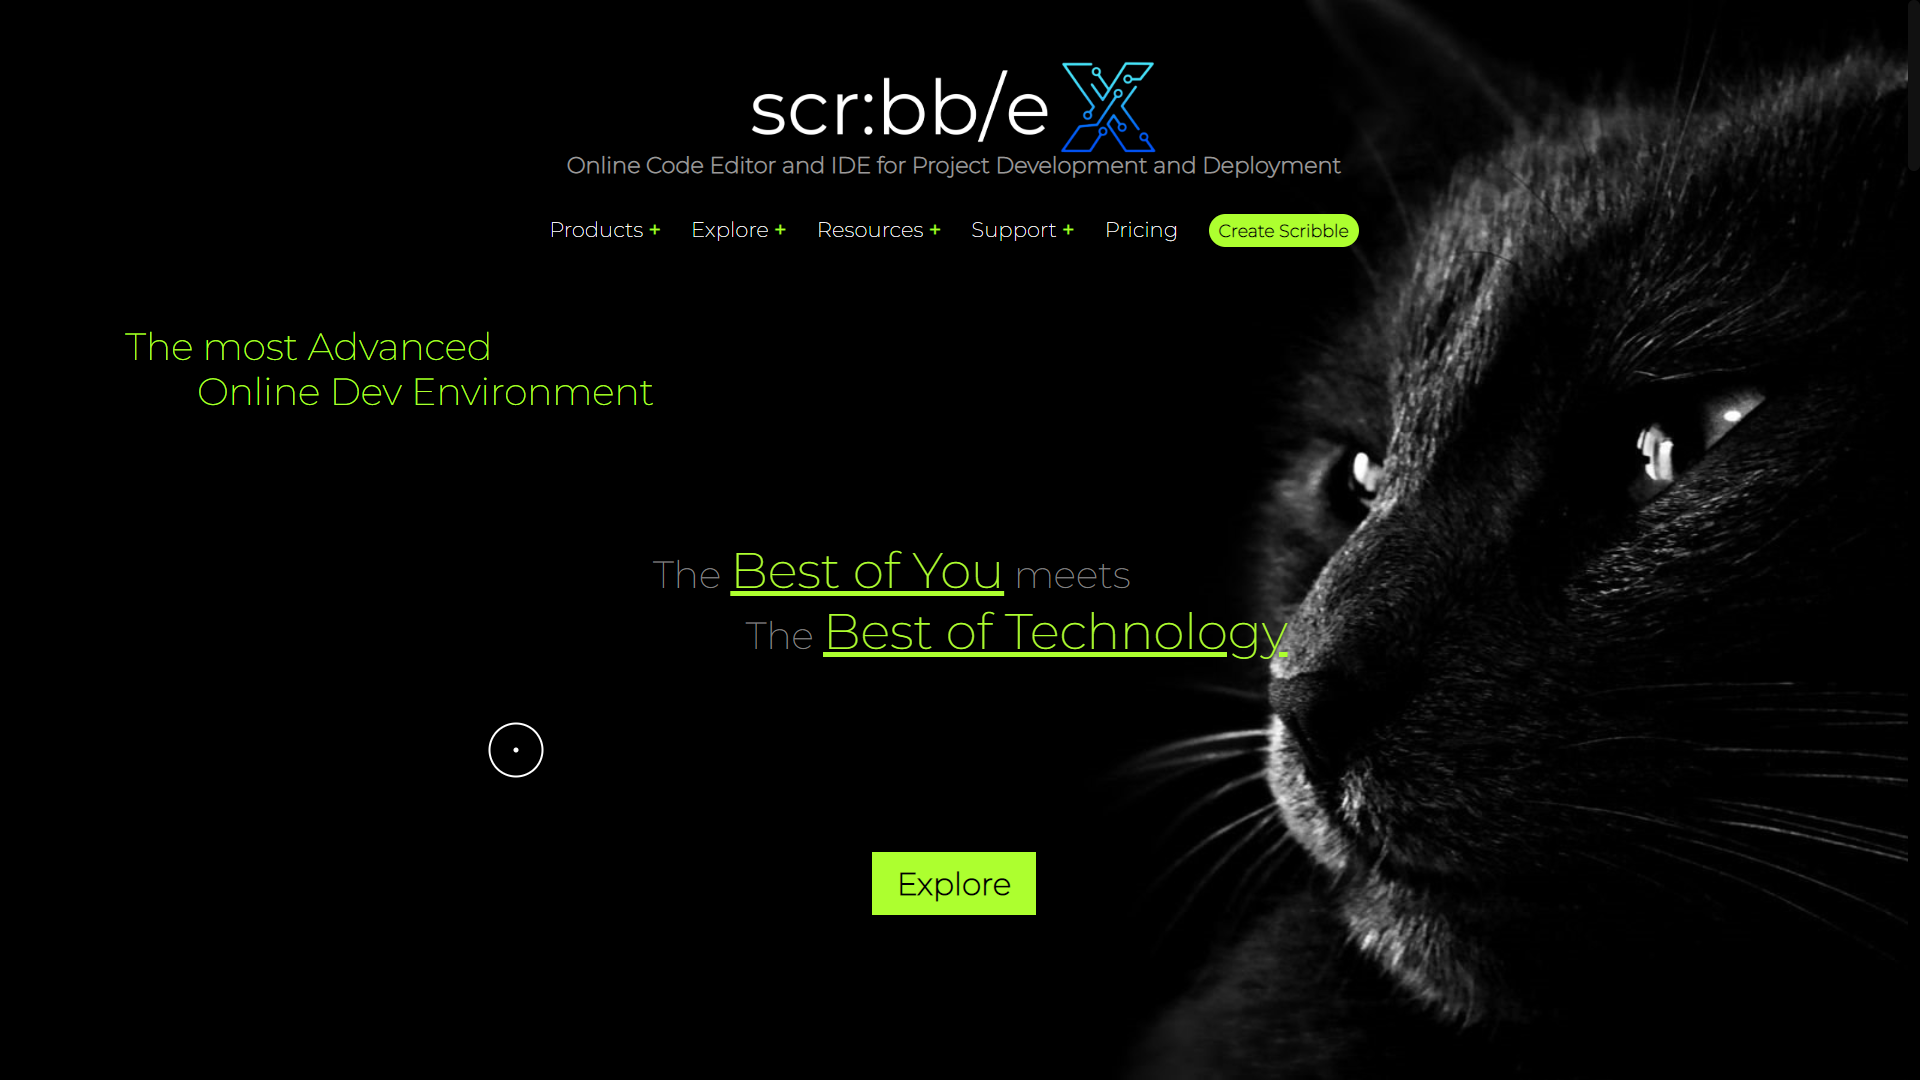 ScribbleX httpsscribblexnet Home page